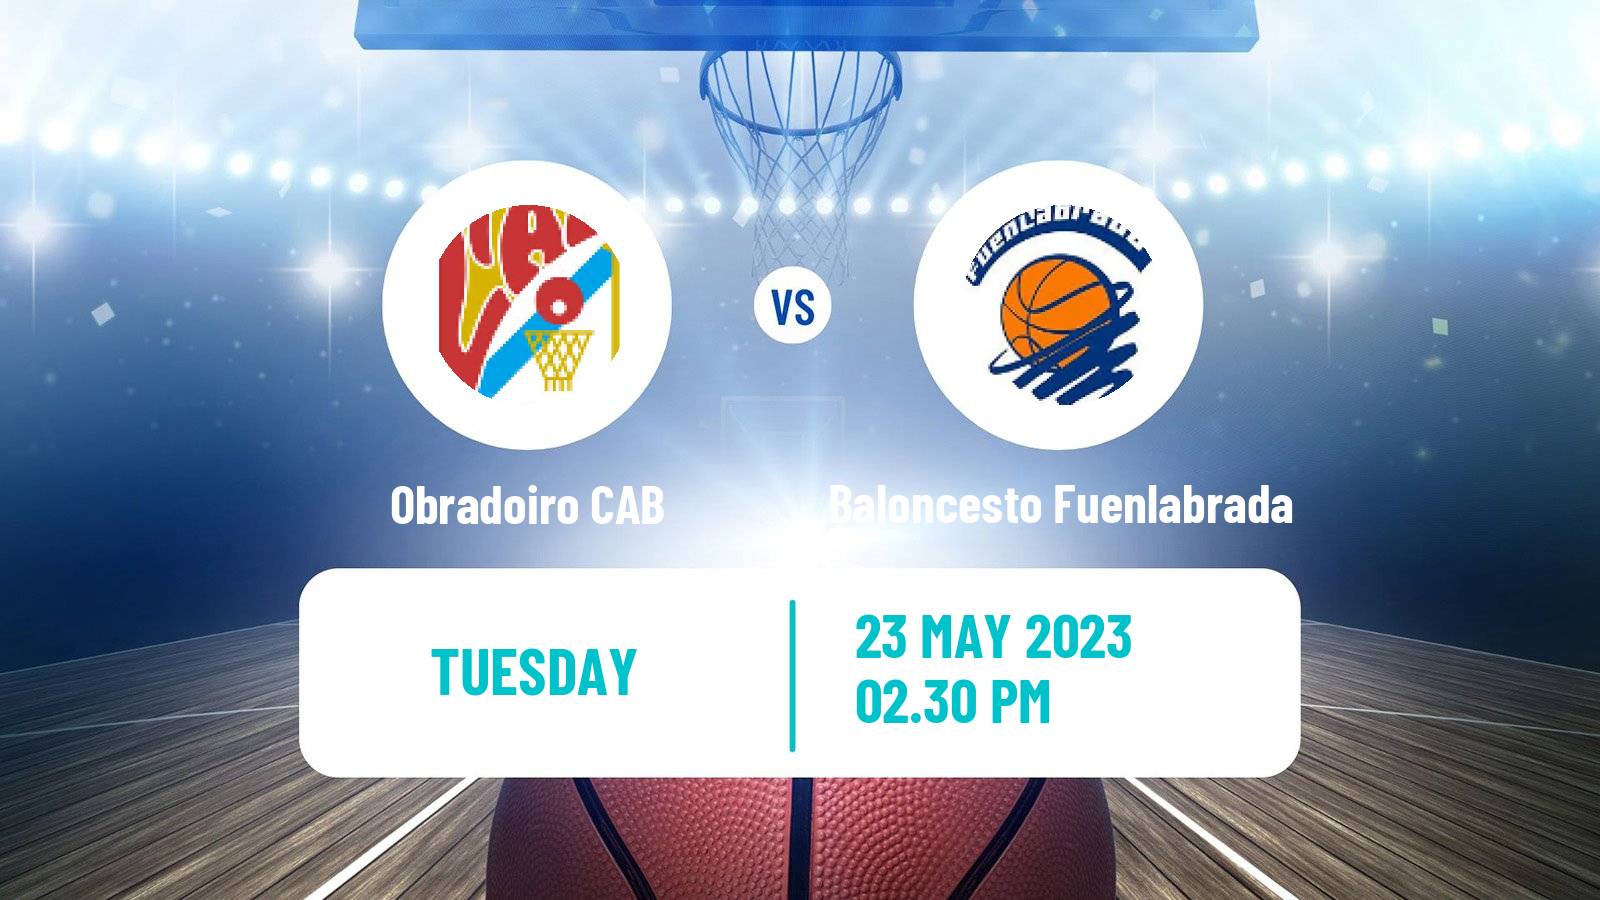 Basketball Spanish ACB League Obradoiro CAB - Baloncesto Fuenlabrada